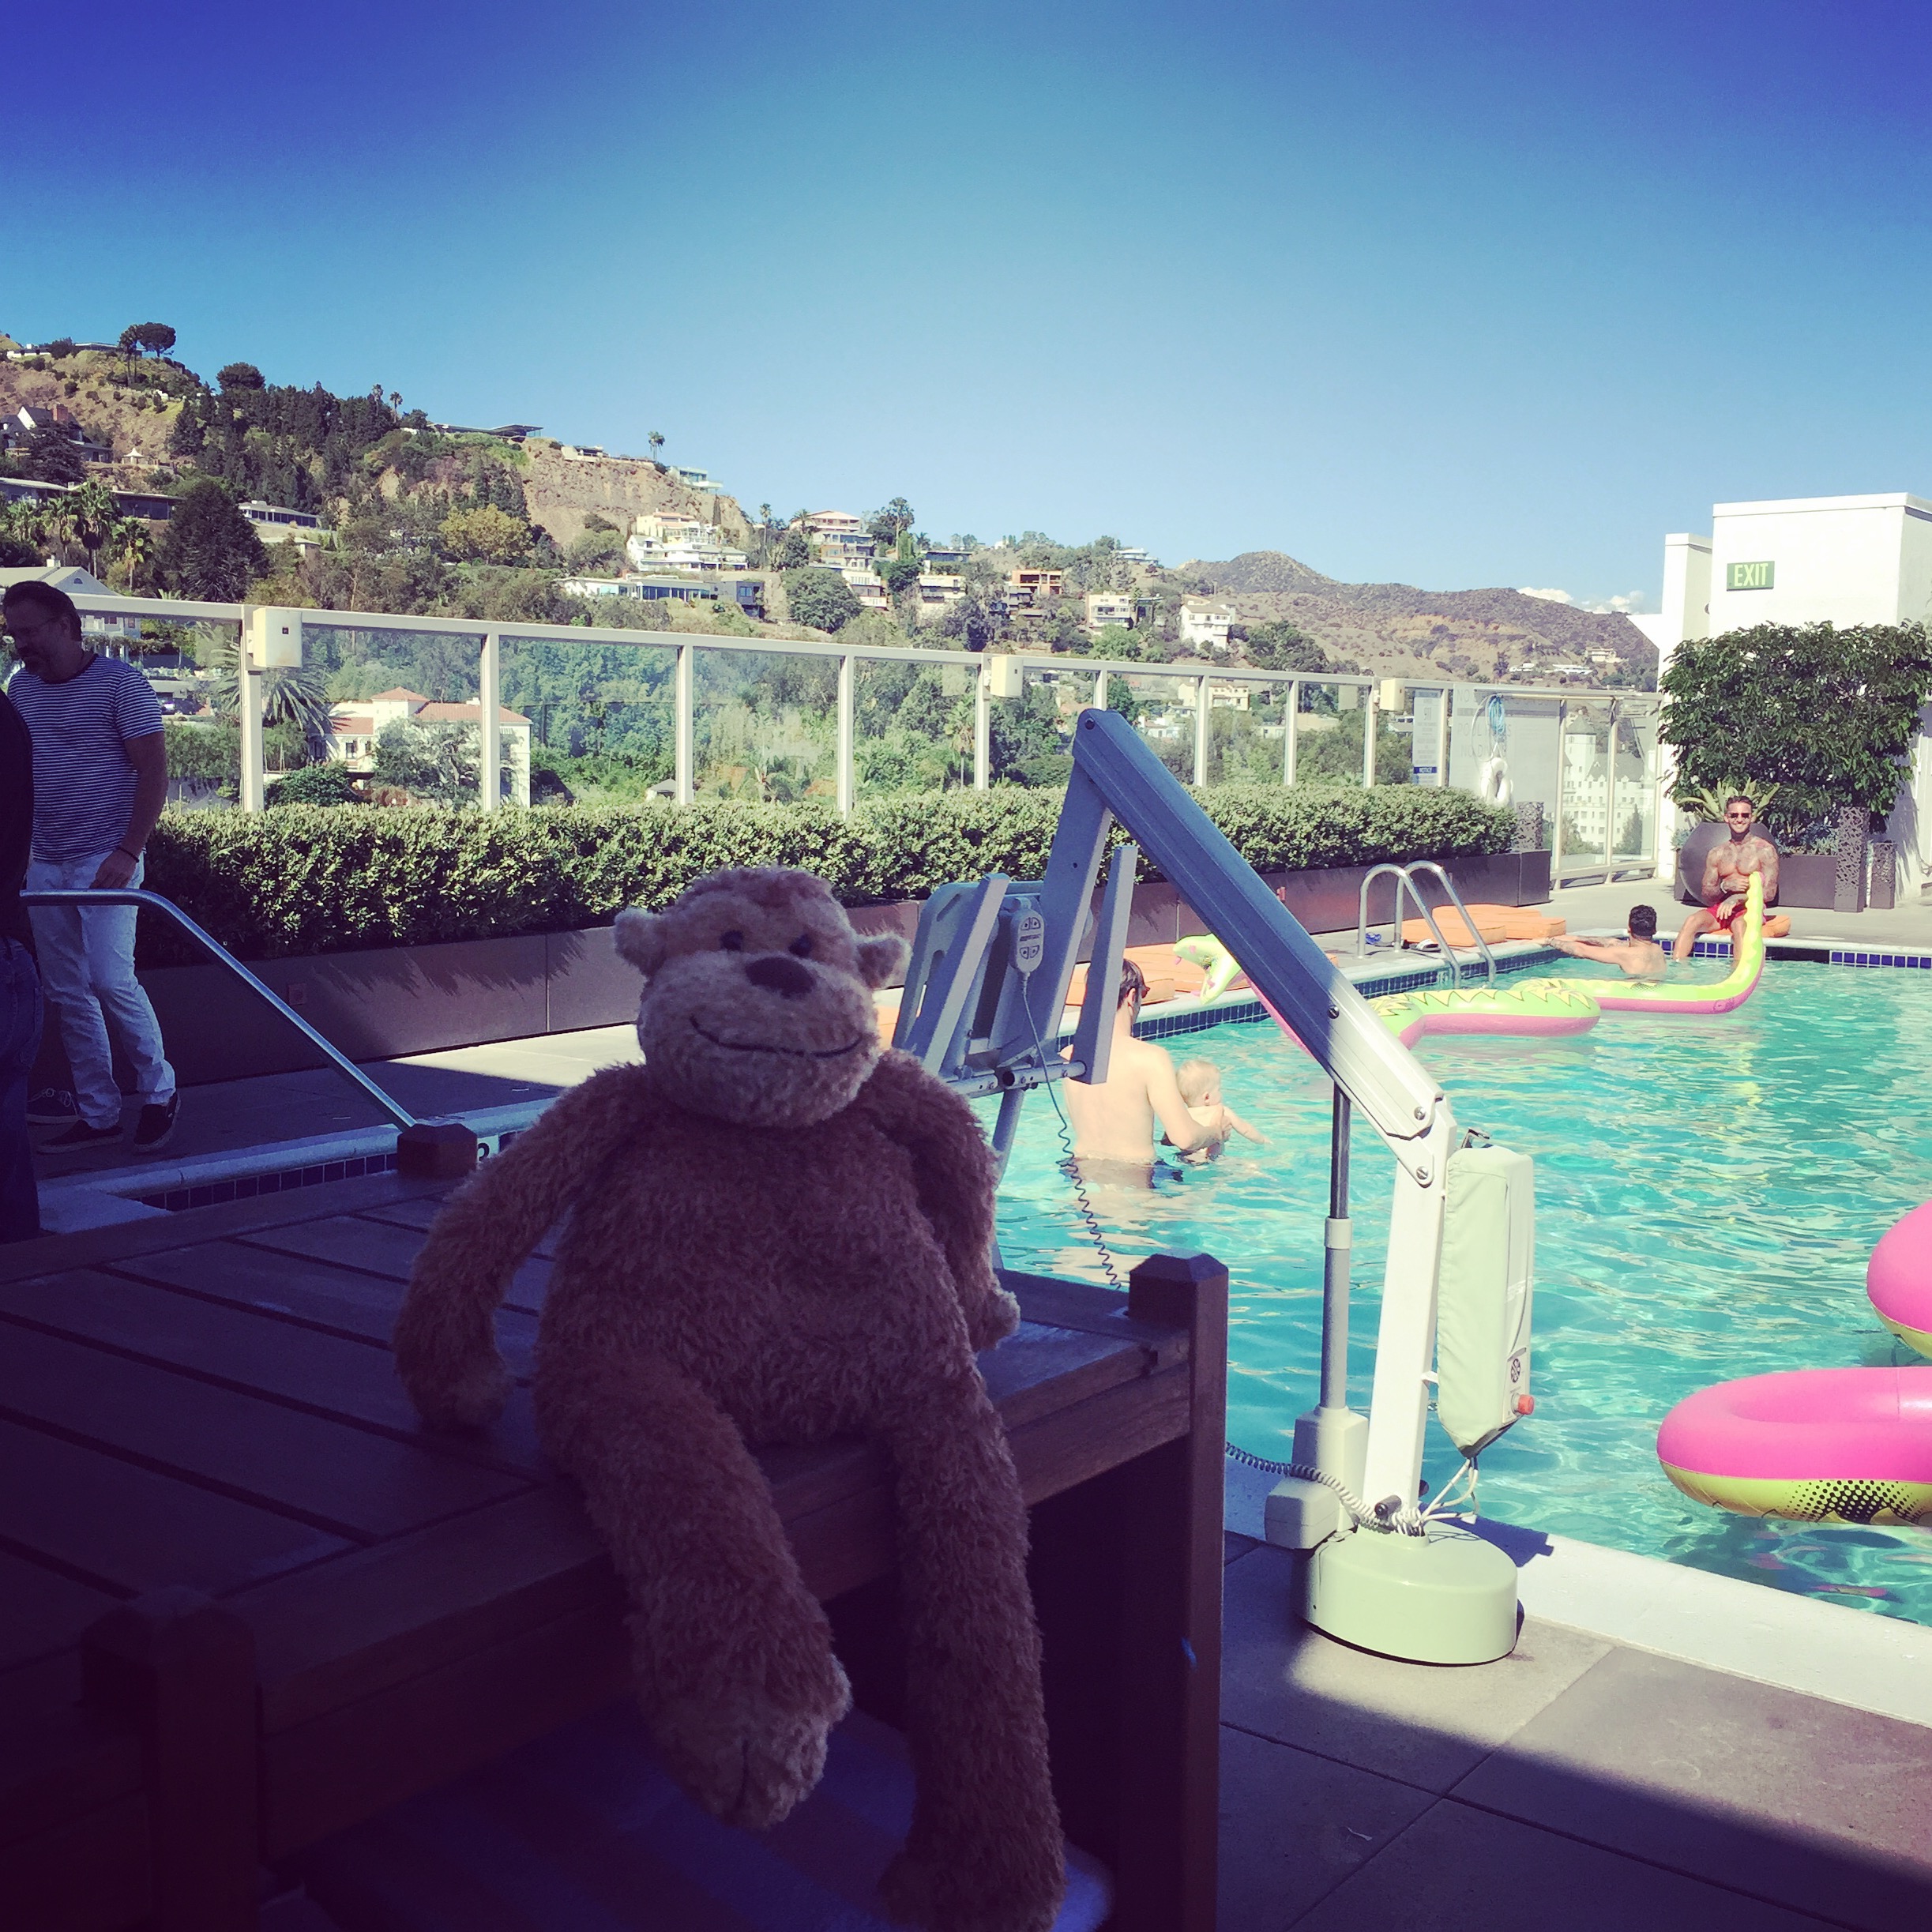 a teddy bear sitting on a table by a pool